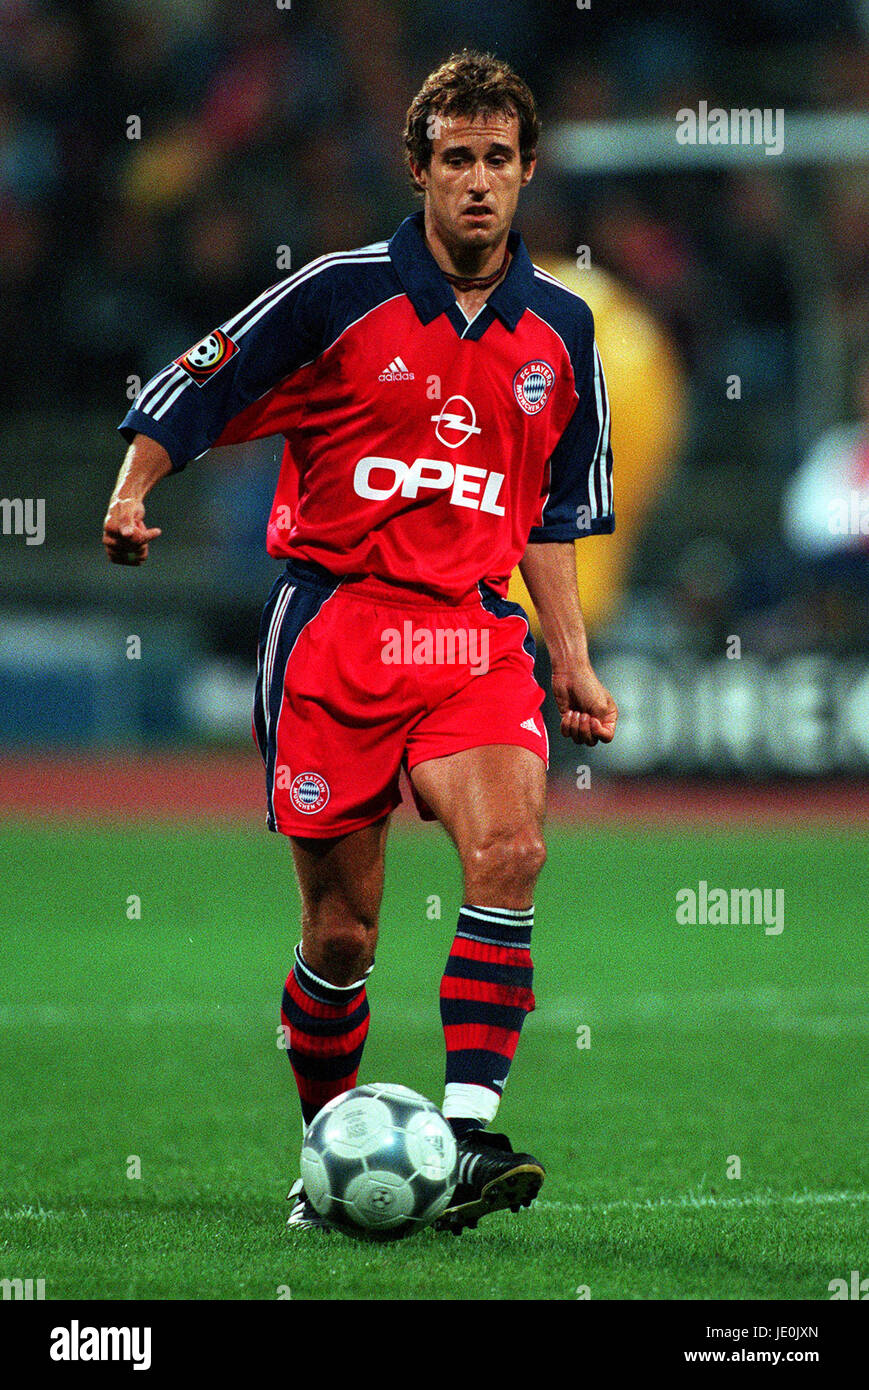 MEHMET SCHOLL BAYERN MUNICH FC MUNICH OPEL MASTERS 2000 05 August 2000  Stock Photo - Alamy